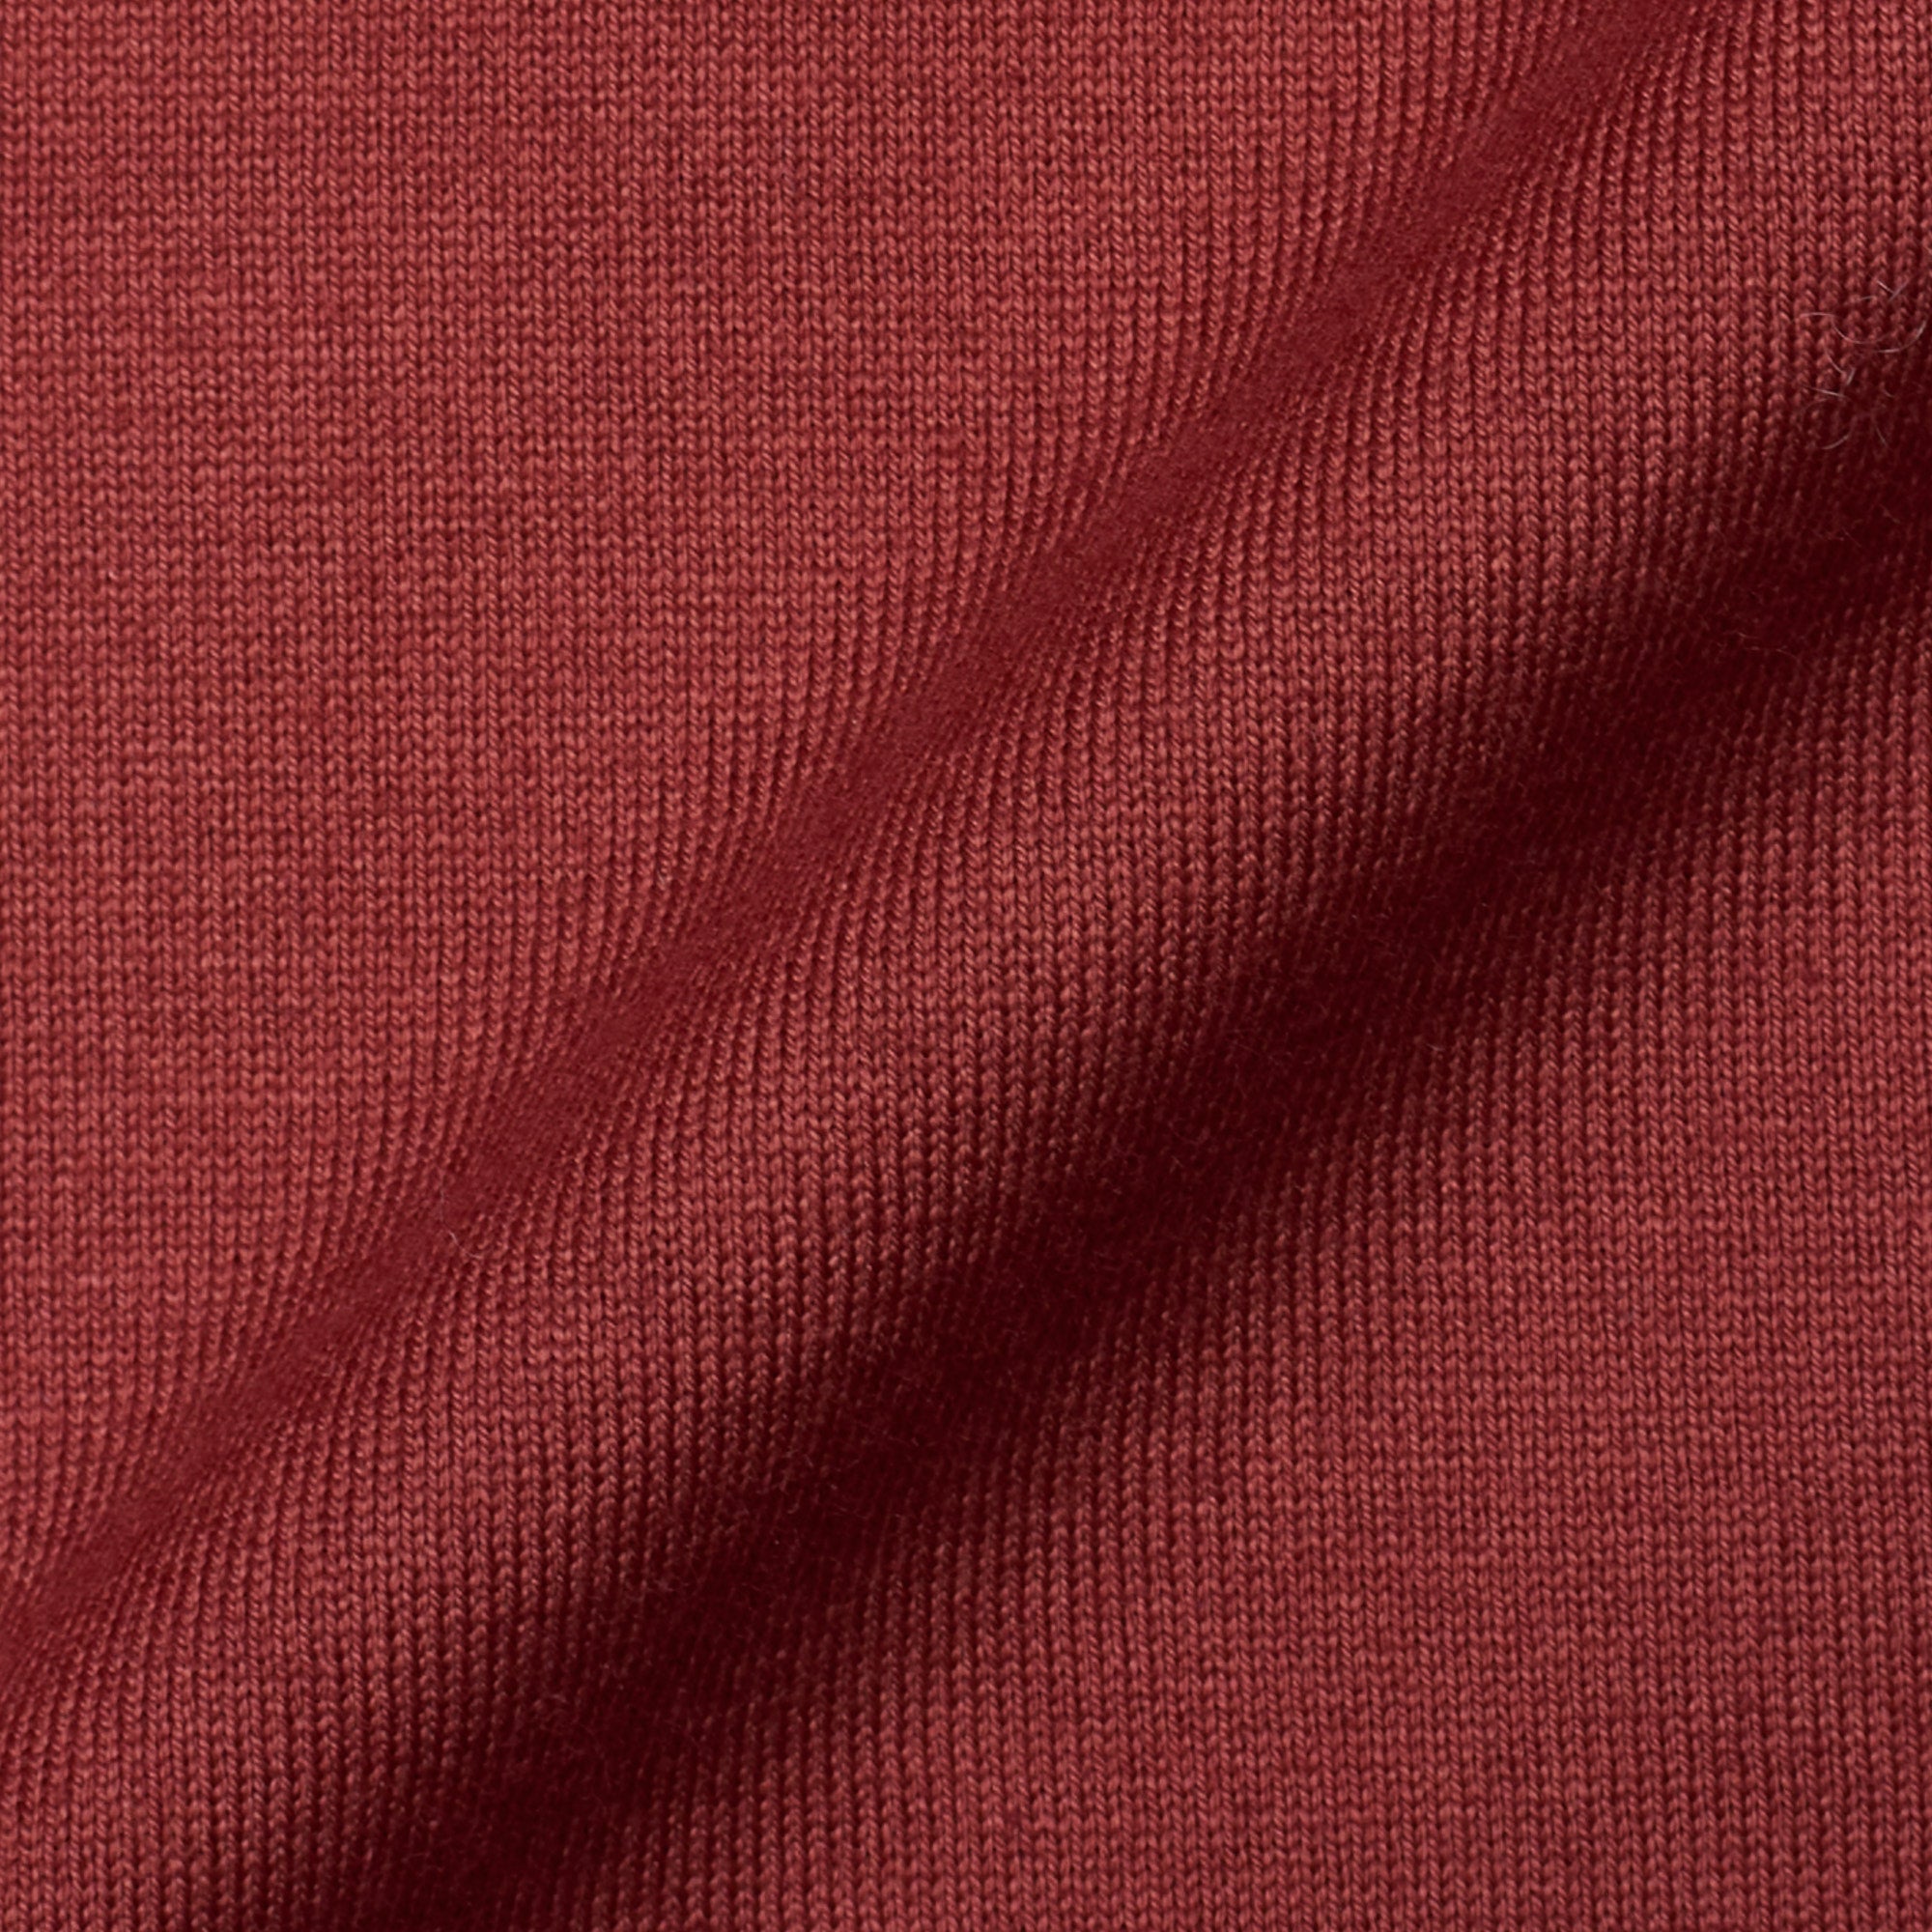 FEDELI "Zero" Brick Red Cotton Jersey Long Sleeve Polo Shirt NEW FEDELI